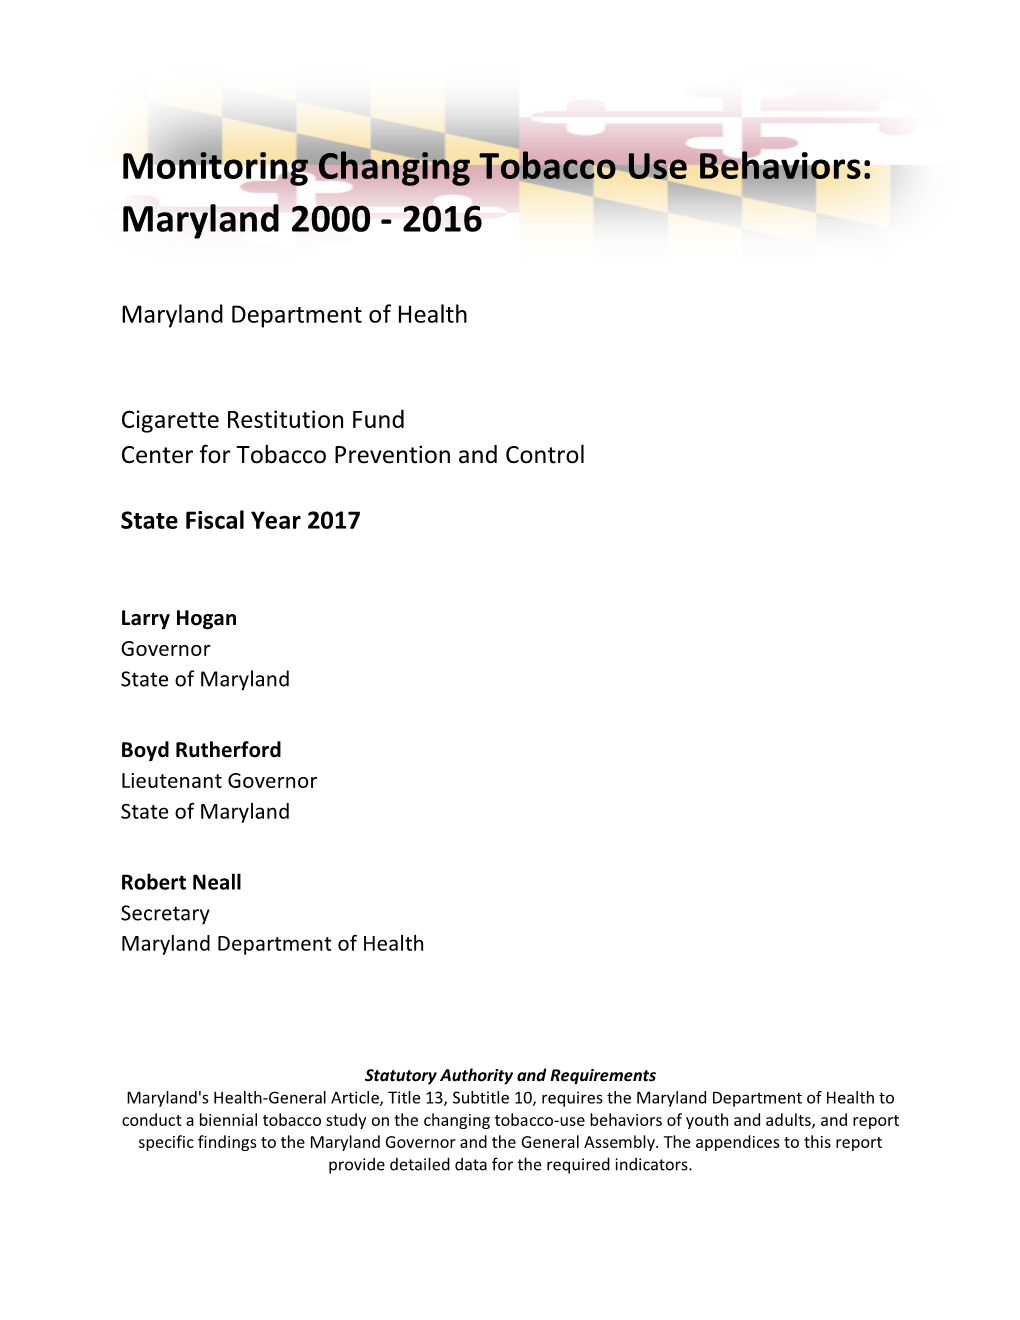 Monitoring Changing Tobacco Use Behaviors: Maryland 2000 - 2016